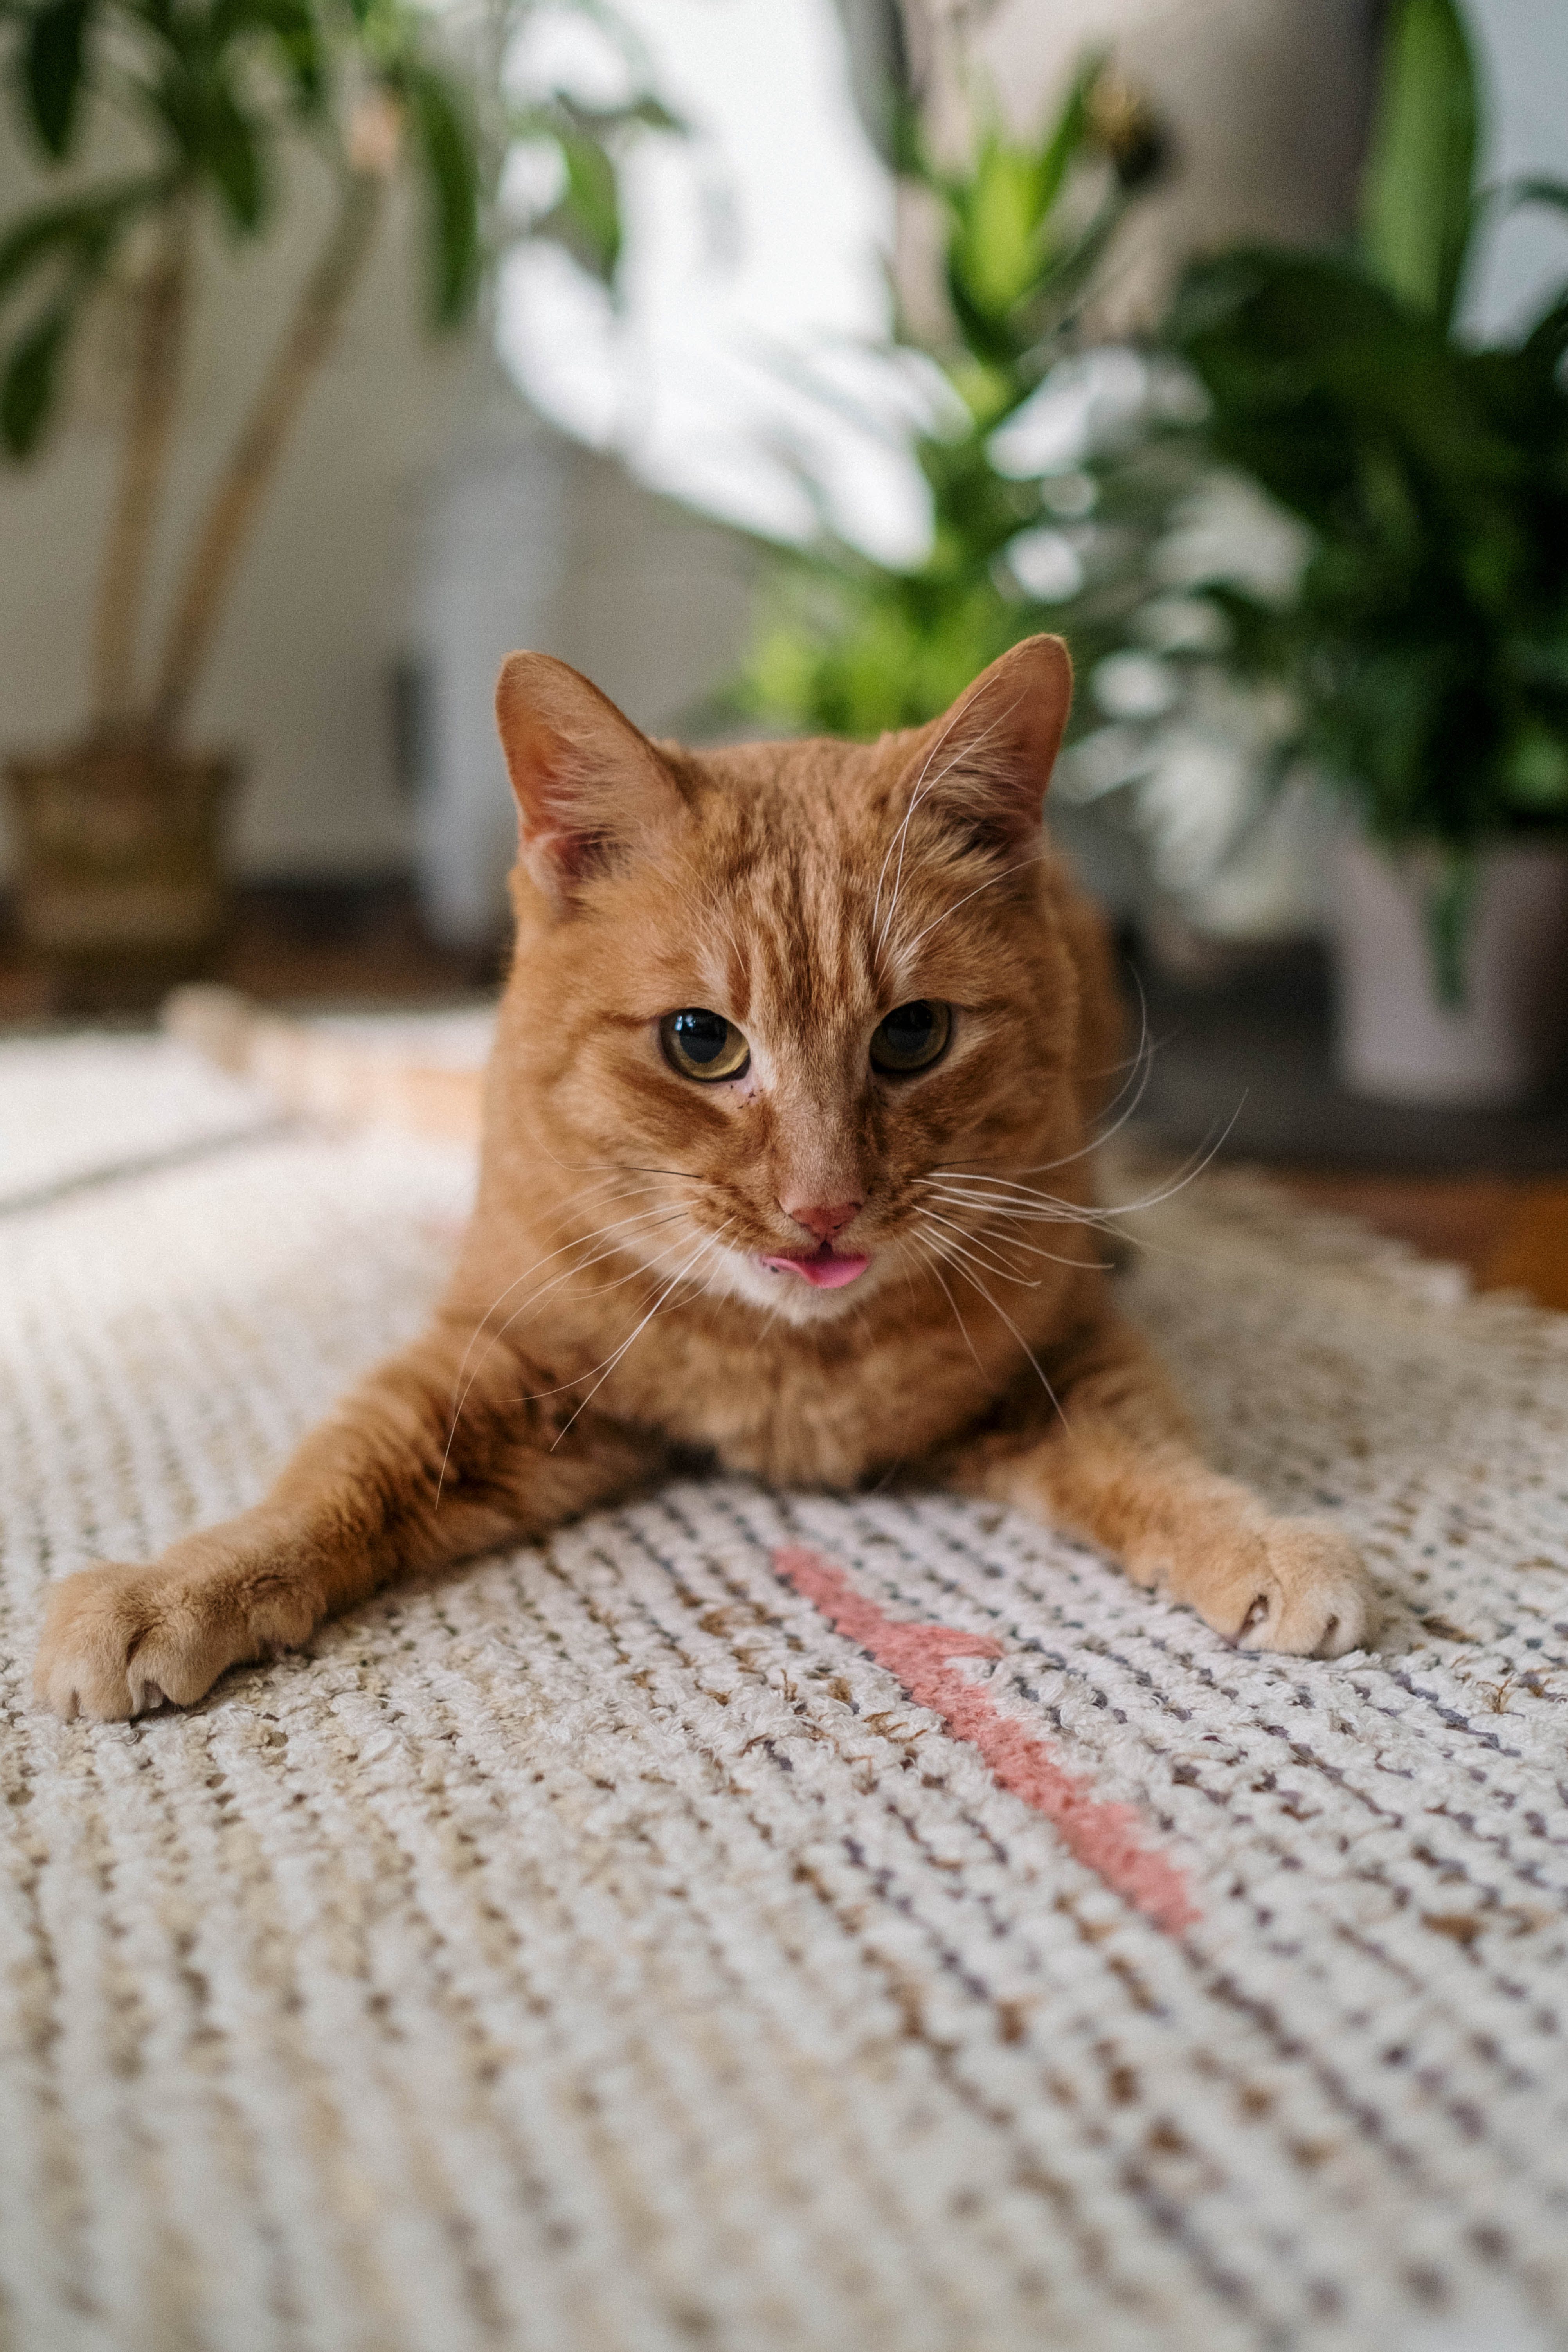 Cat on the carpet | Source: Pexels